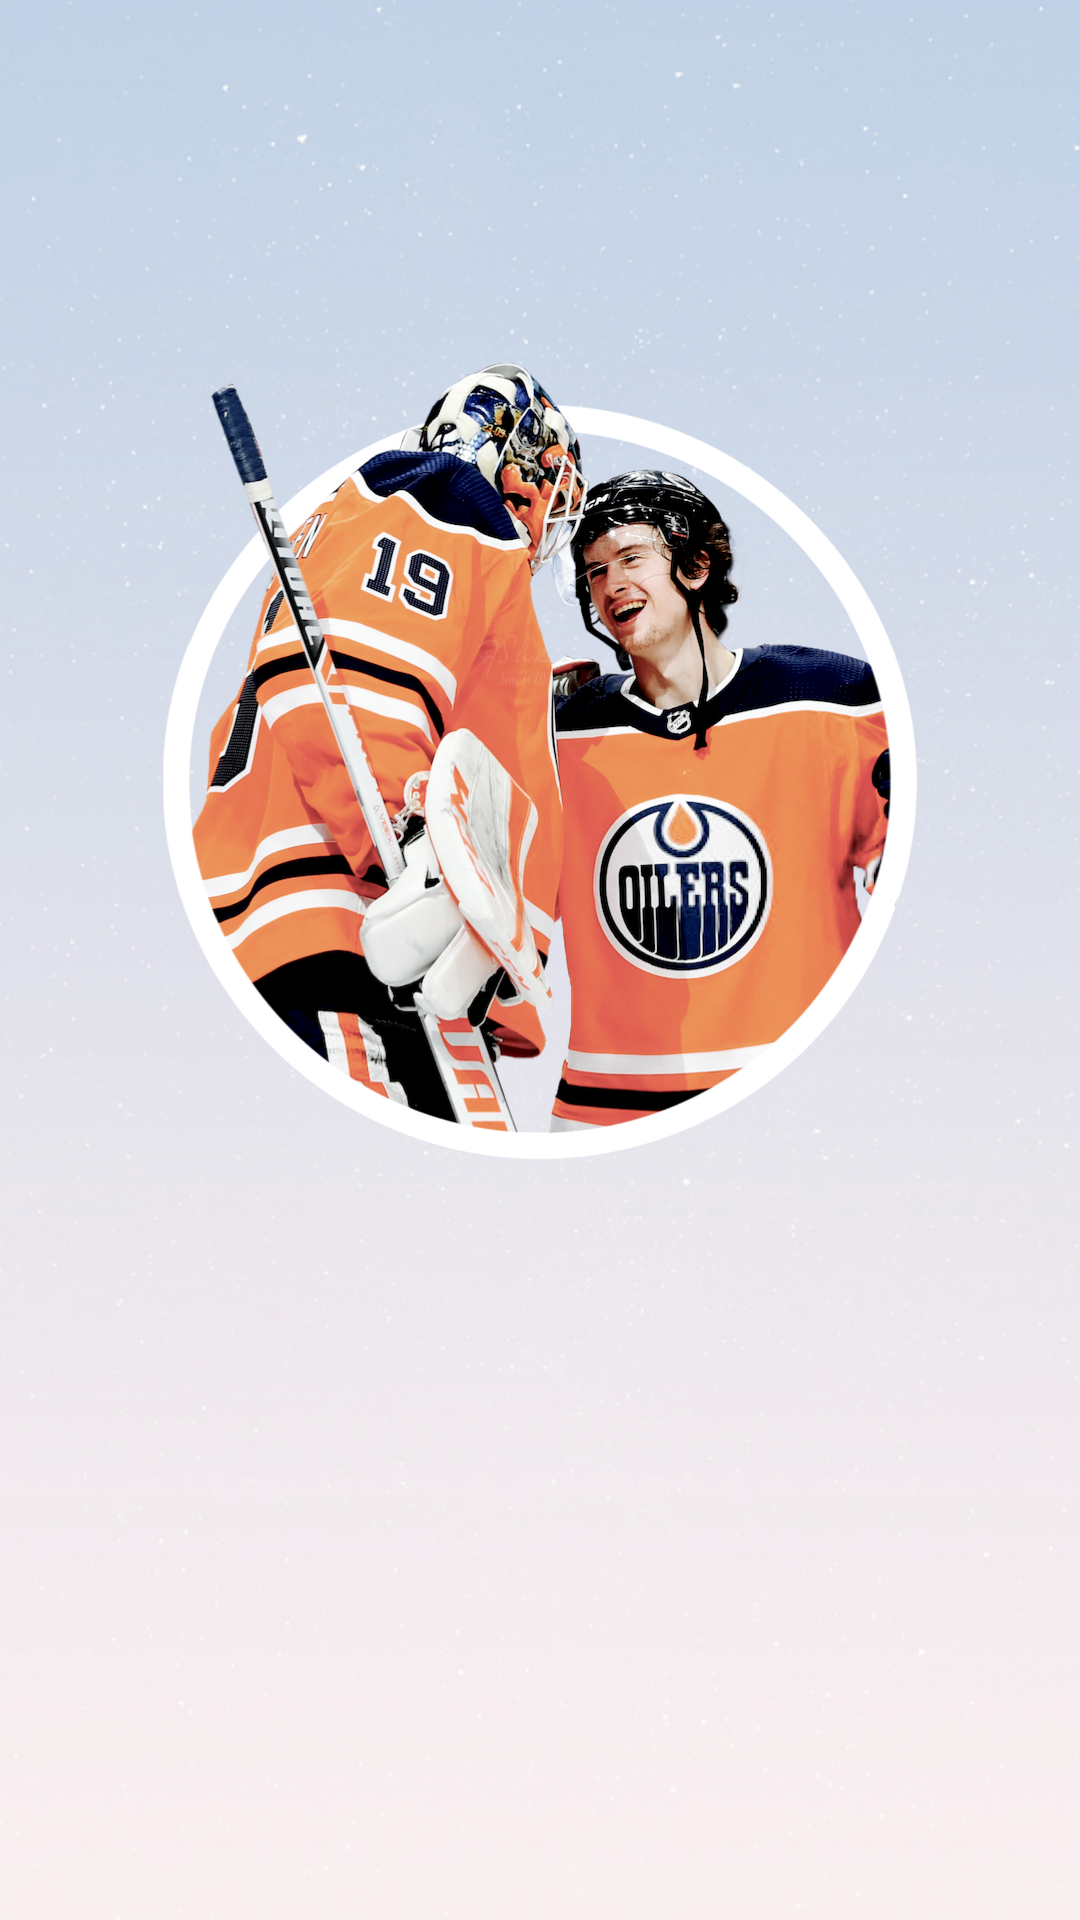 Edmonton Oilers (2) - Tumblr Gallery